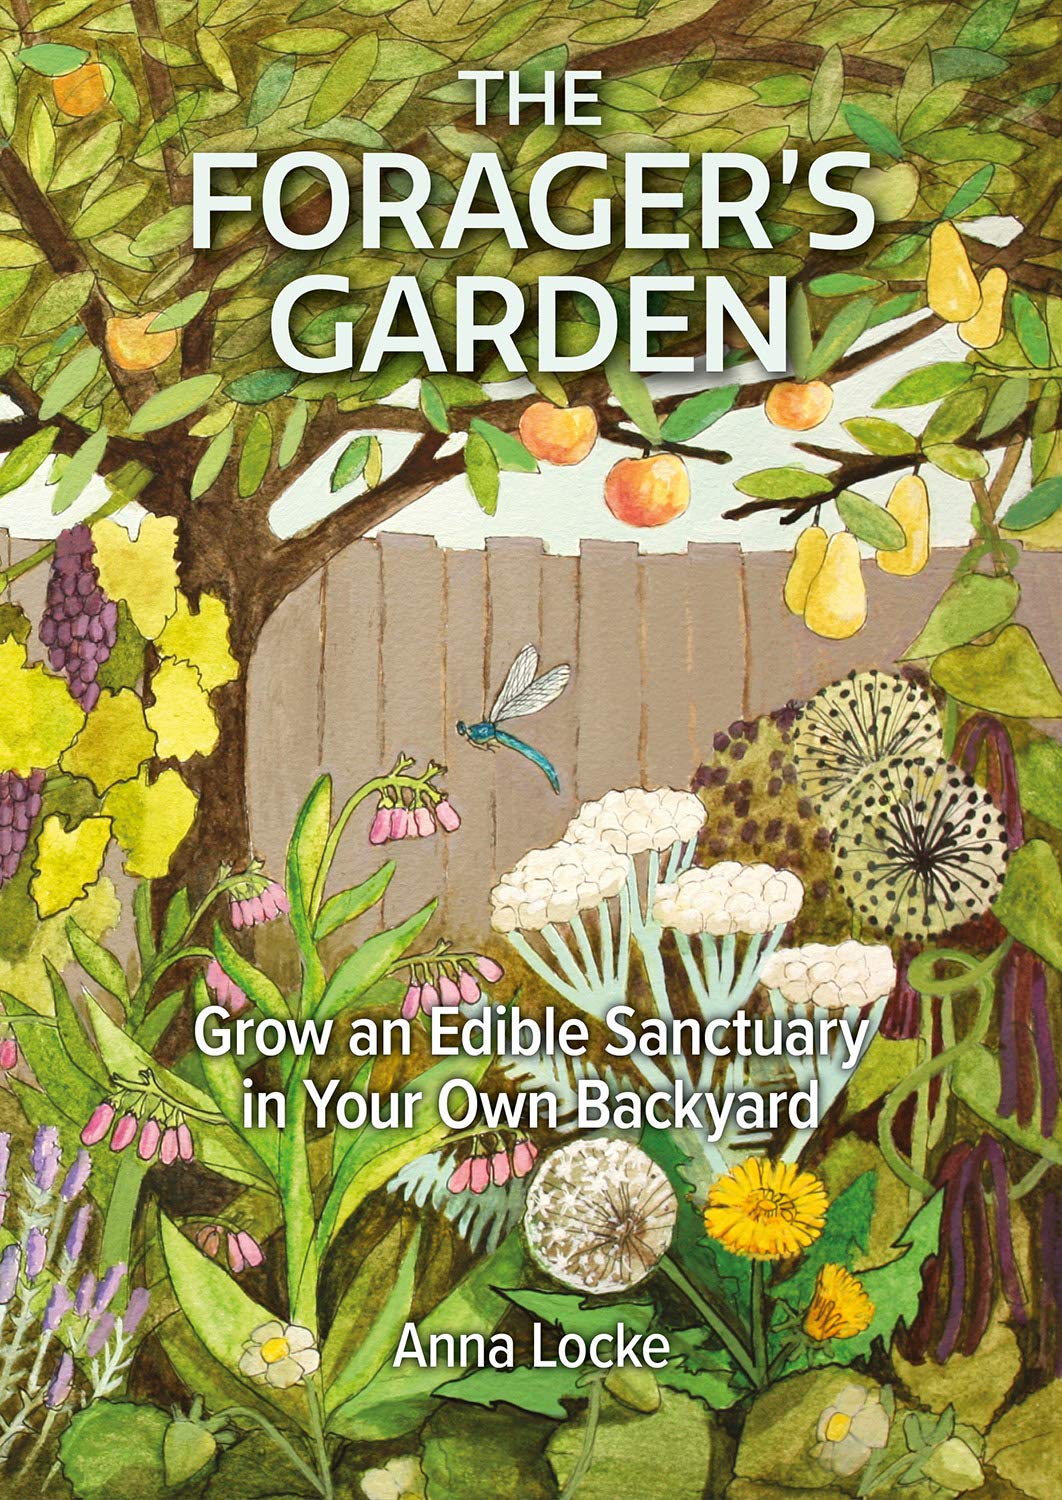 The Forager’s Garden: Grow an Edible Sanctuary in Your Own Backyard (Anna Locke)